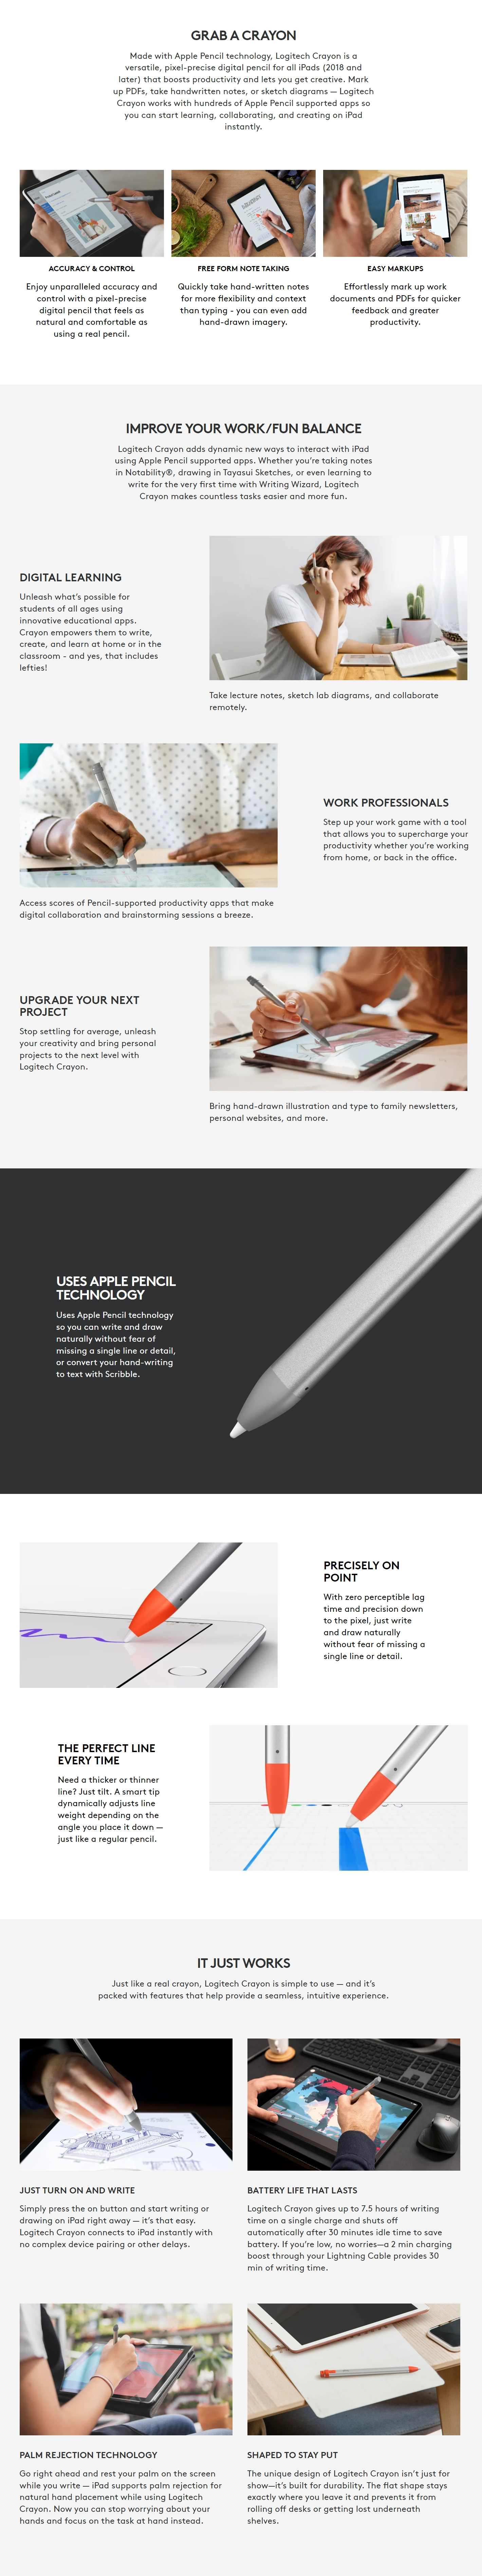 iPad-Accessories-Logitech-Crayon-versatile-pixel-precise-digital-pencil-for-iPad-914-000035-1